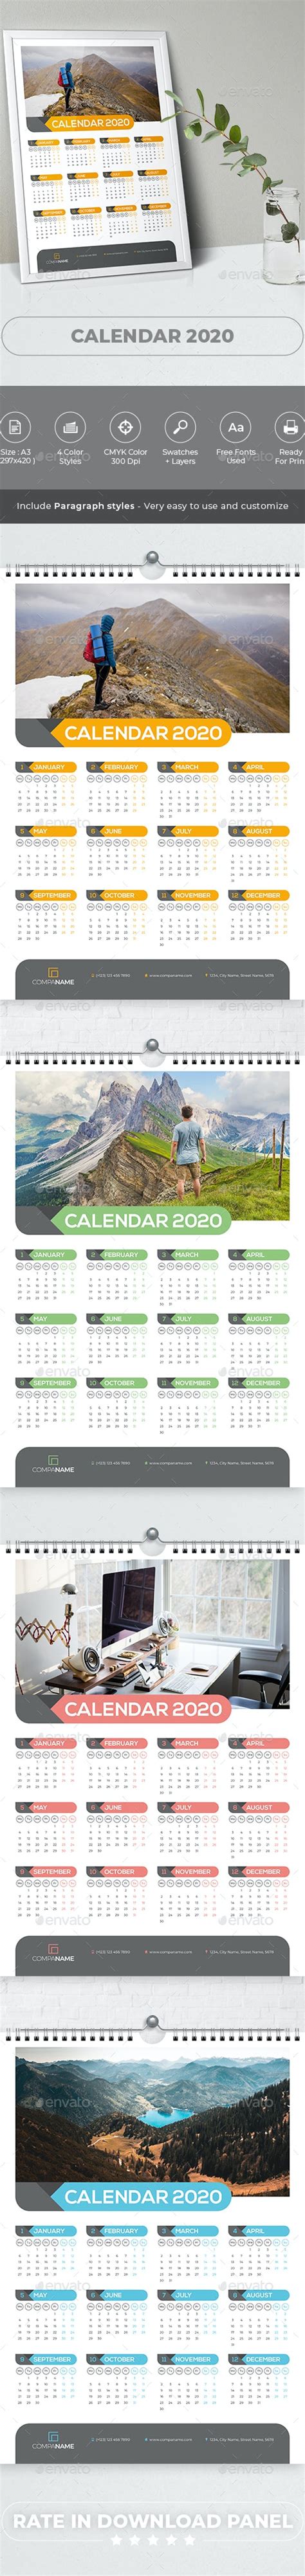 Wall Calendar 2020 By Bourjart Graphicriver